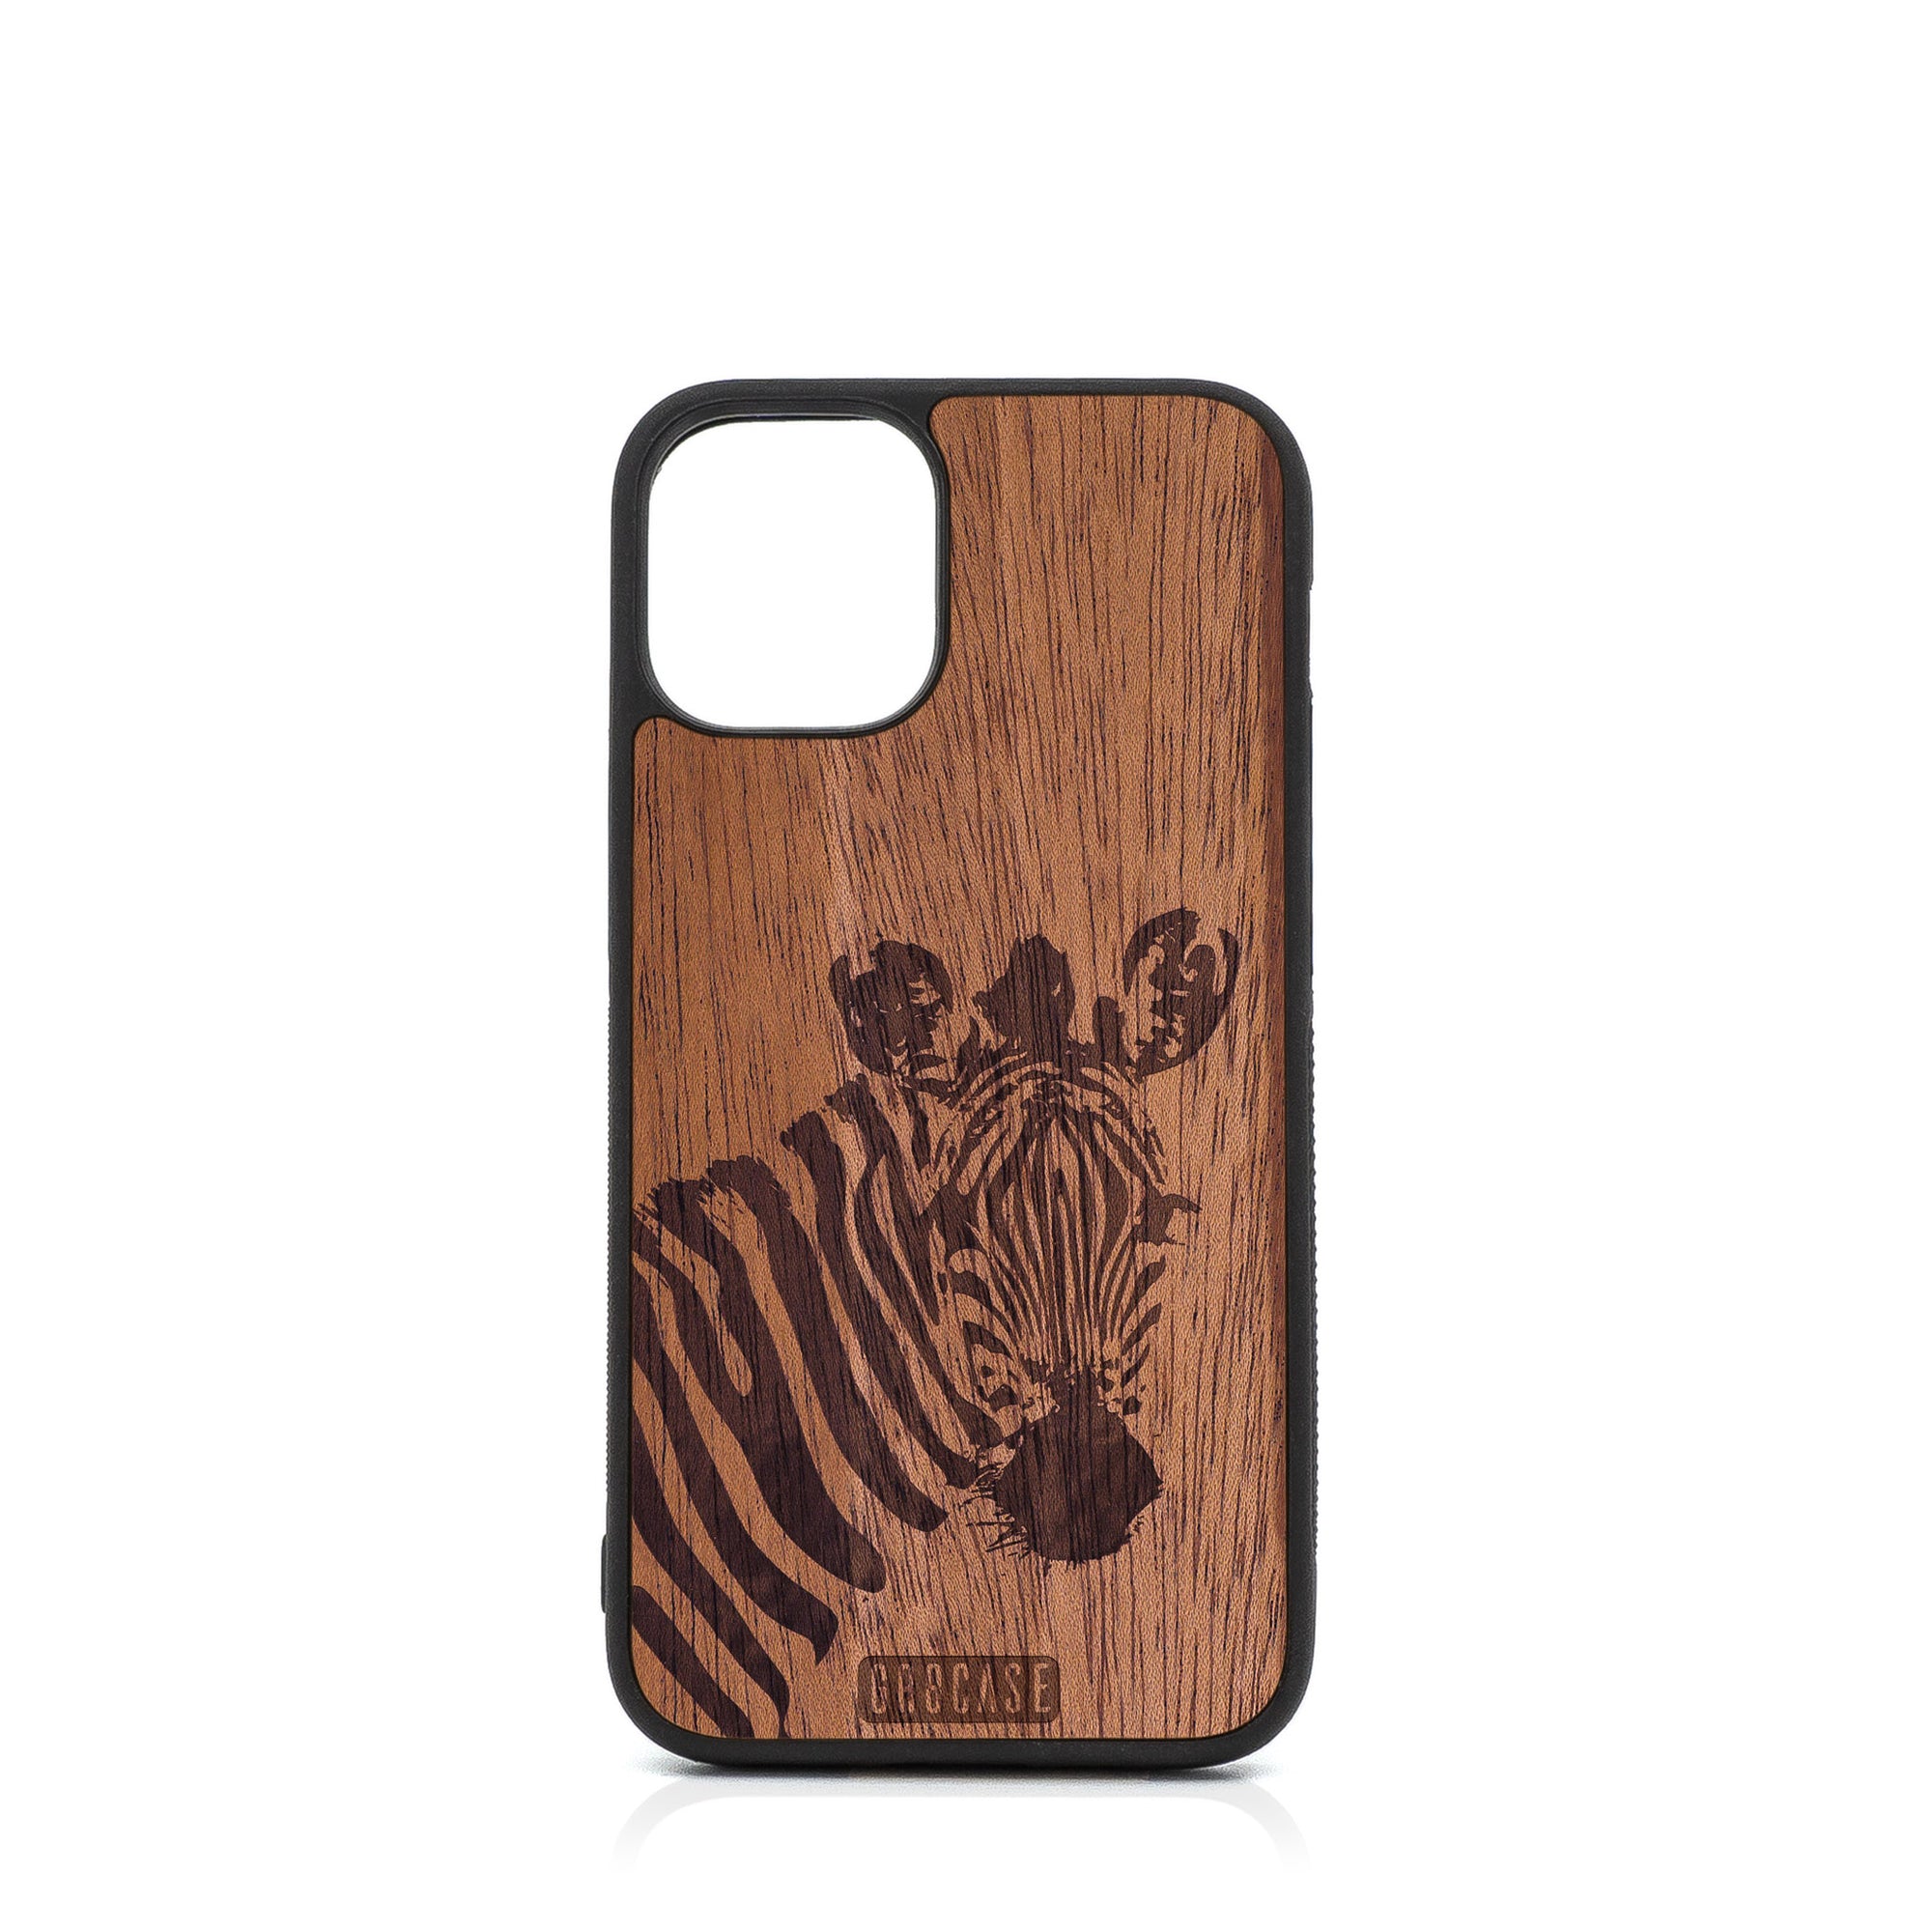 Lookout Zebra Design Wood Case For iPhone 12 Mini